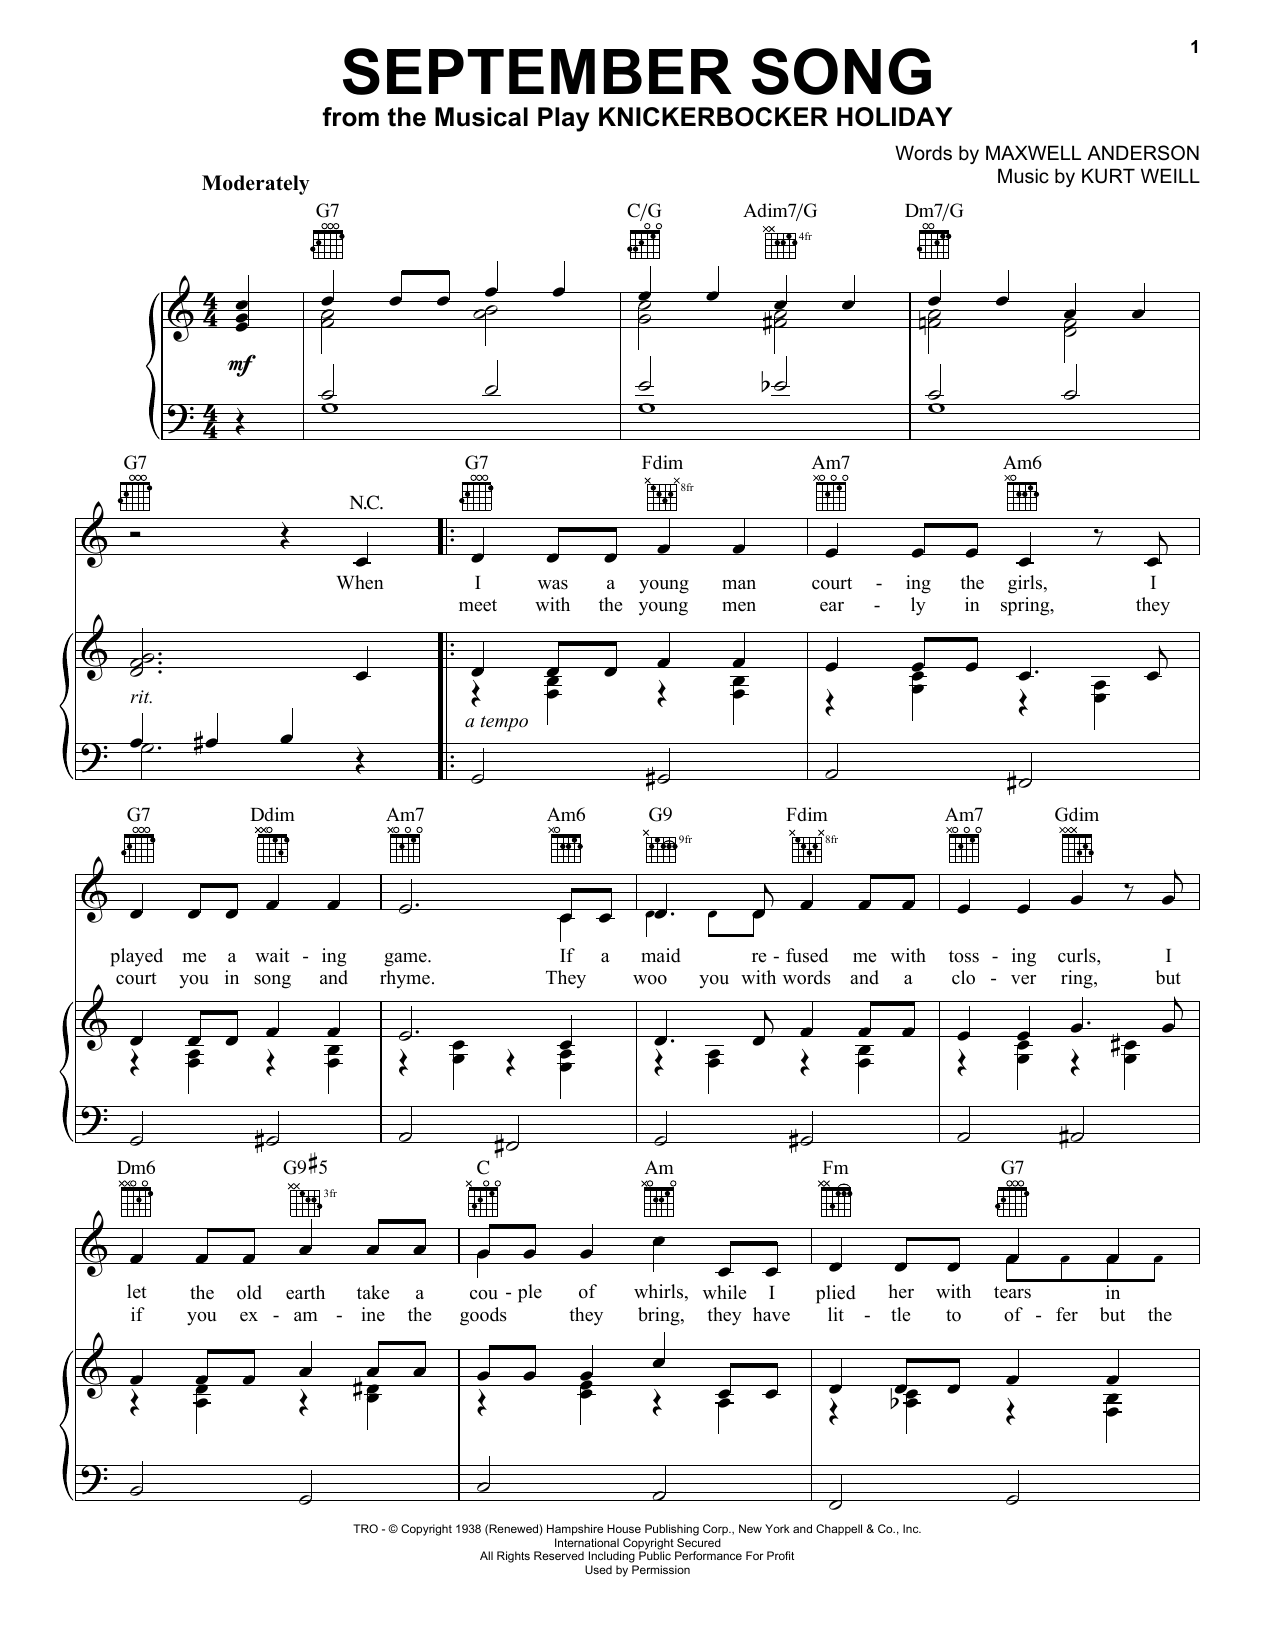 Frank Sinatra September Song Sheet Music Notes & Chords for Ukulele with strumming patterns - Download or Print PDF